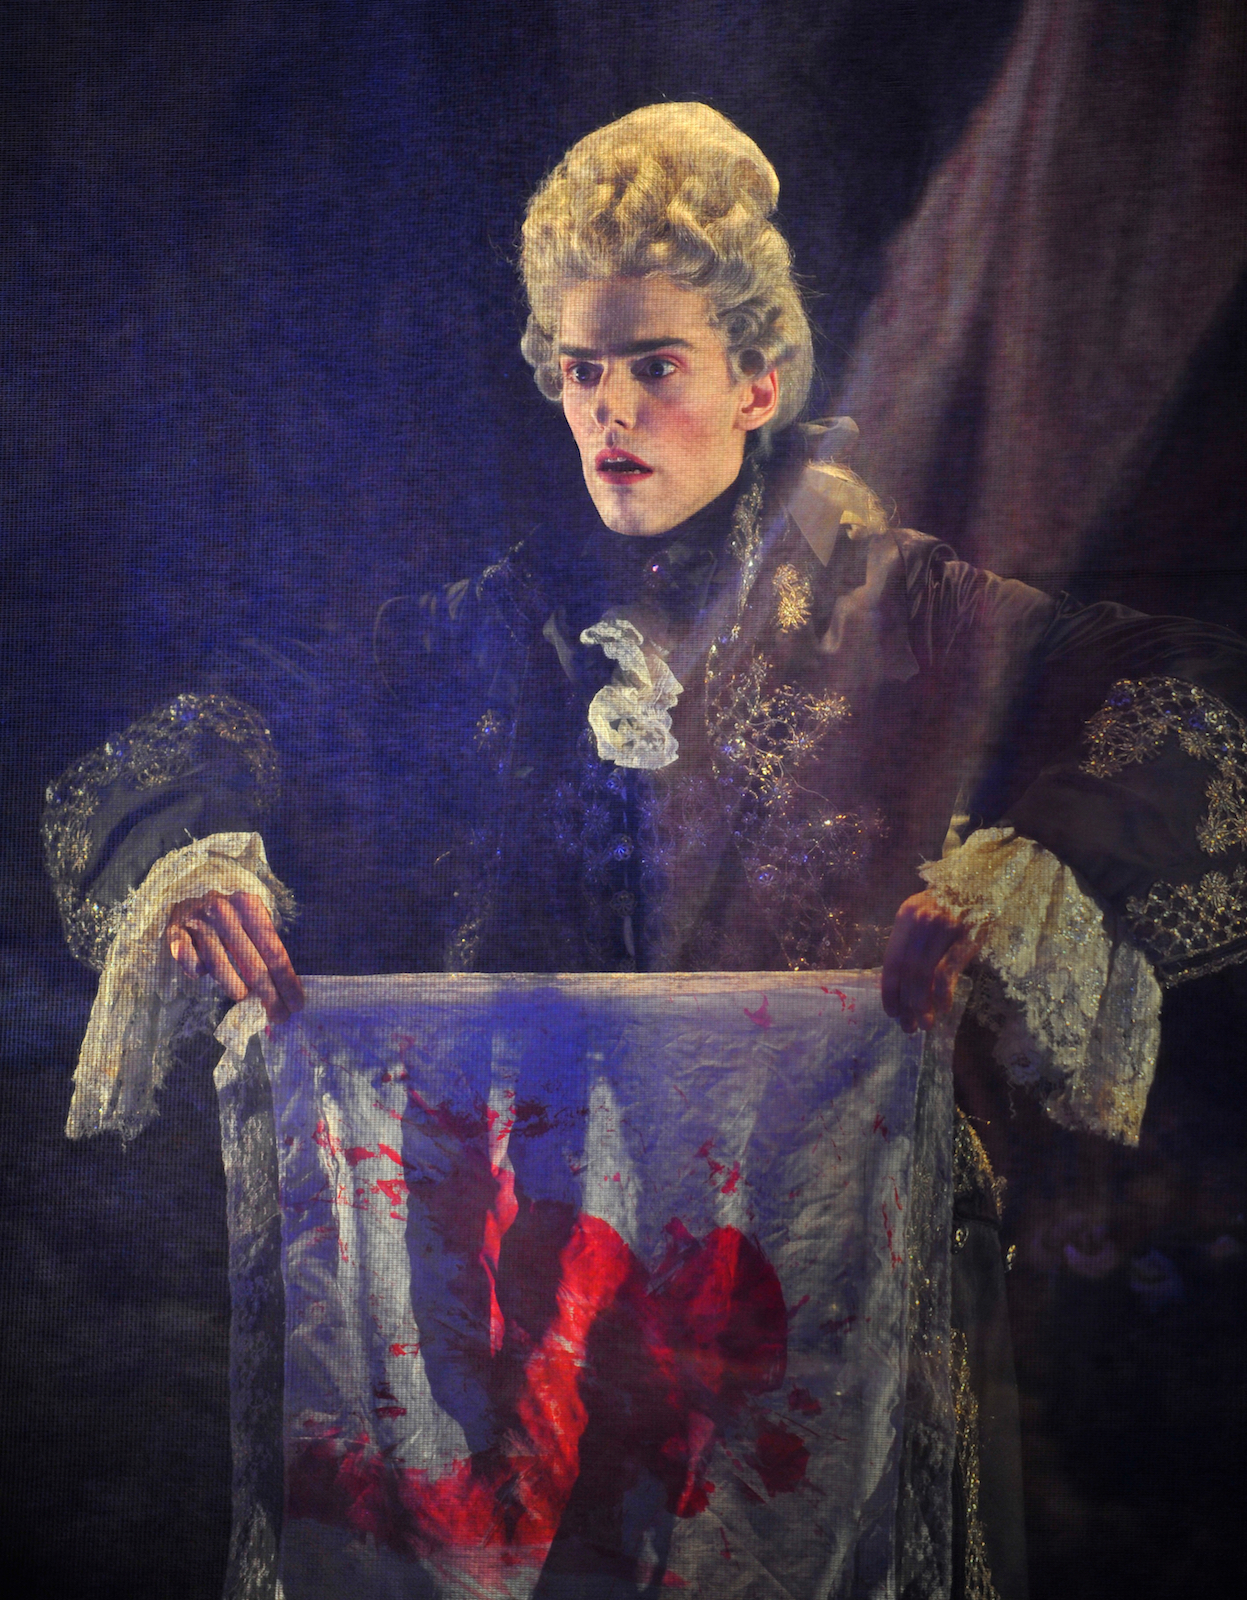 Nuno Roque as Papillon de La Ferté in Marie Antoinette at Festival de Radio France - Opera - Theatre - France 2